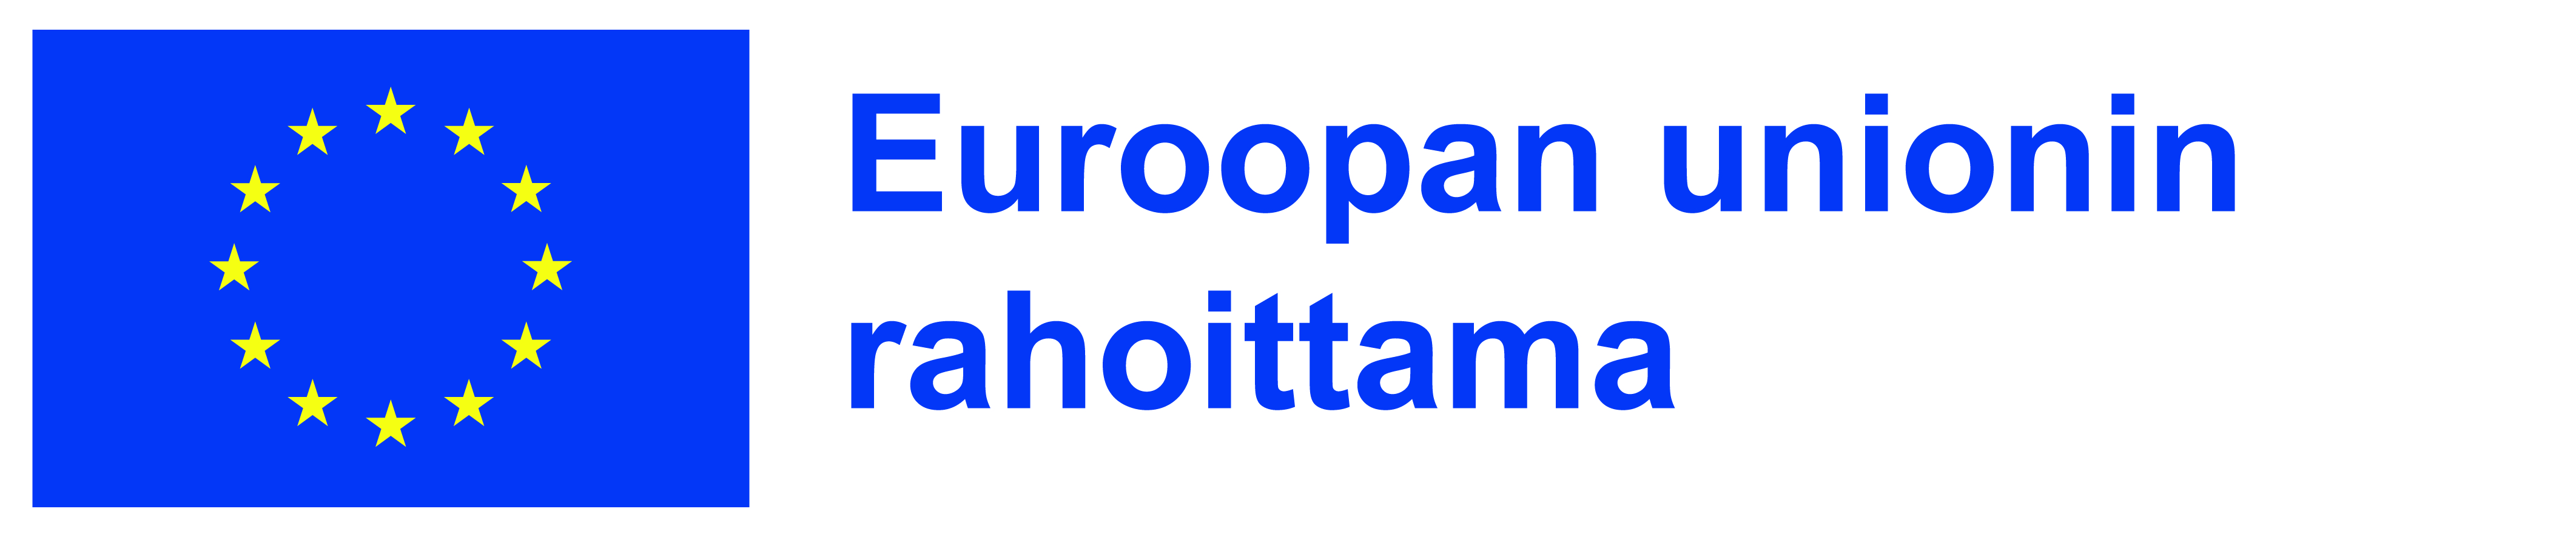 EU:n logo ja Euroopan unionin rahoittama -teksti